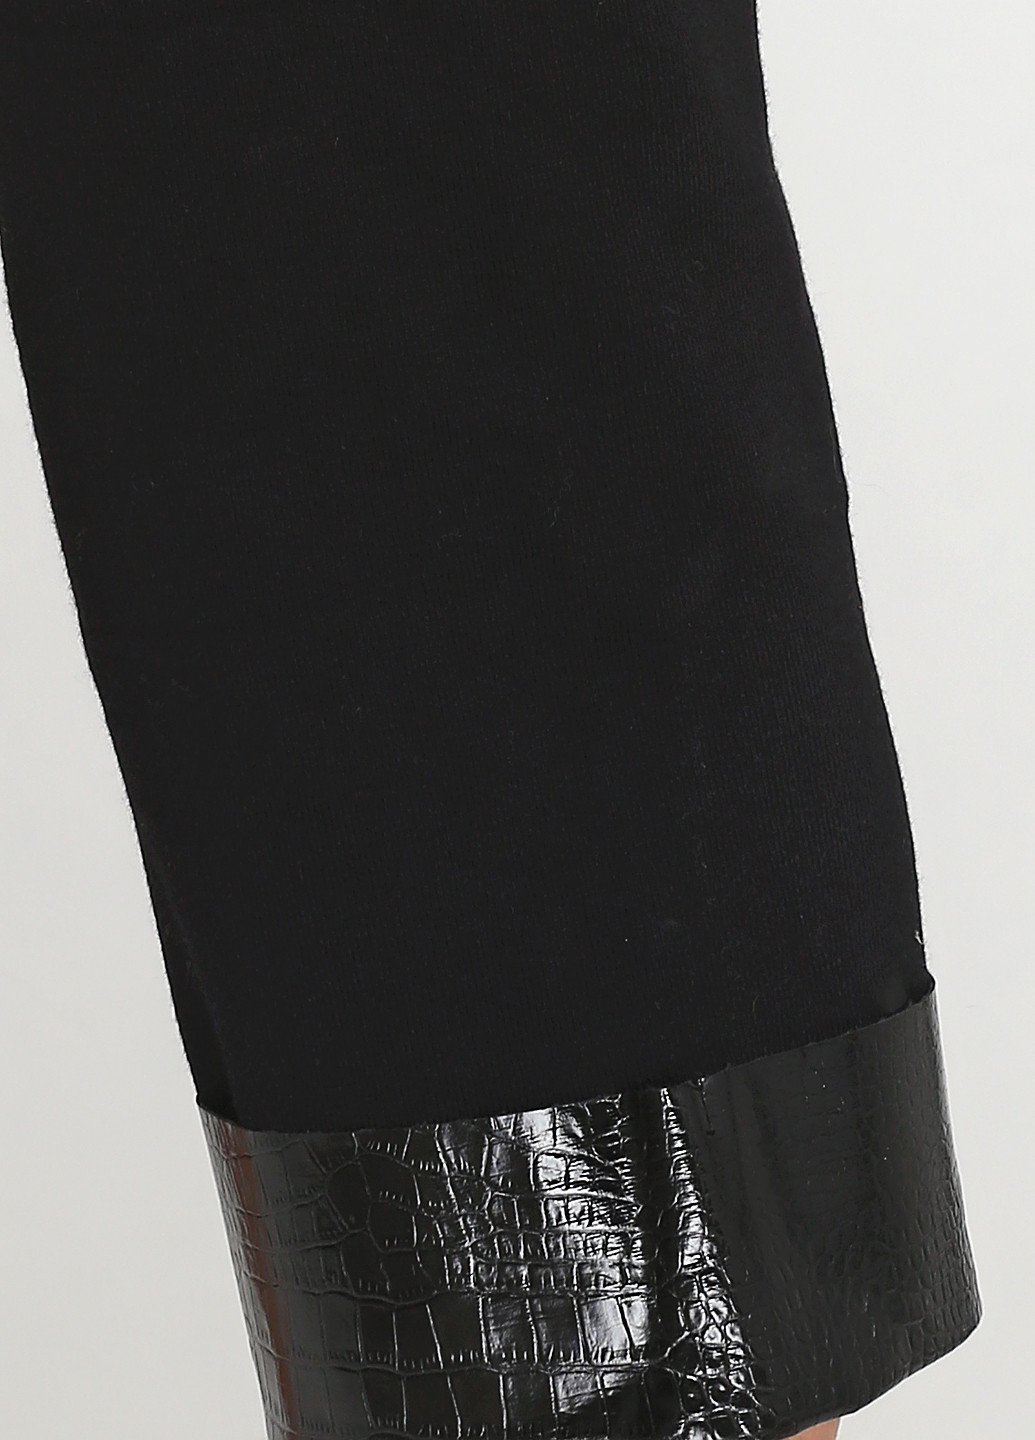 Комбинезон Woman комбинезон-брюки однотонный чёрный кэжуал